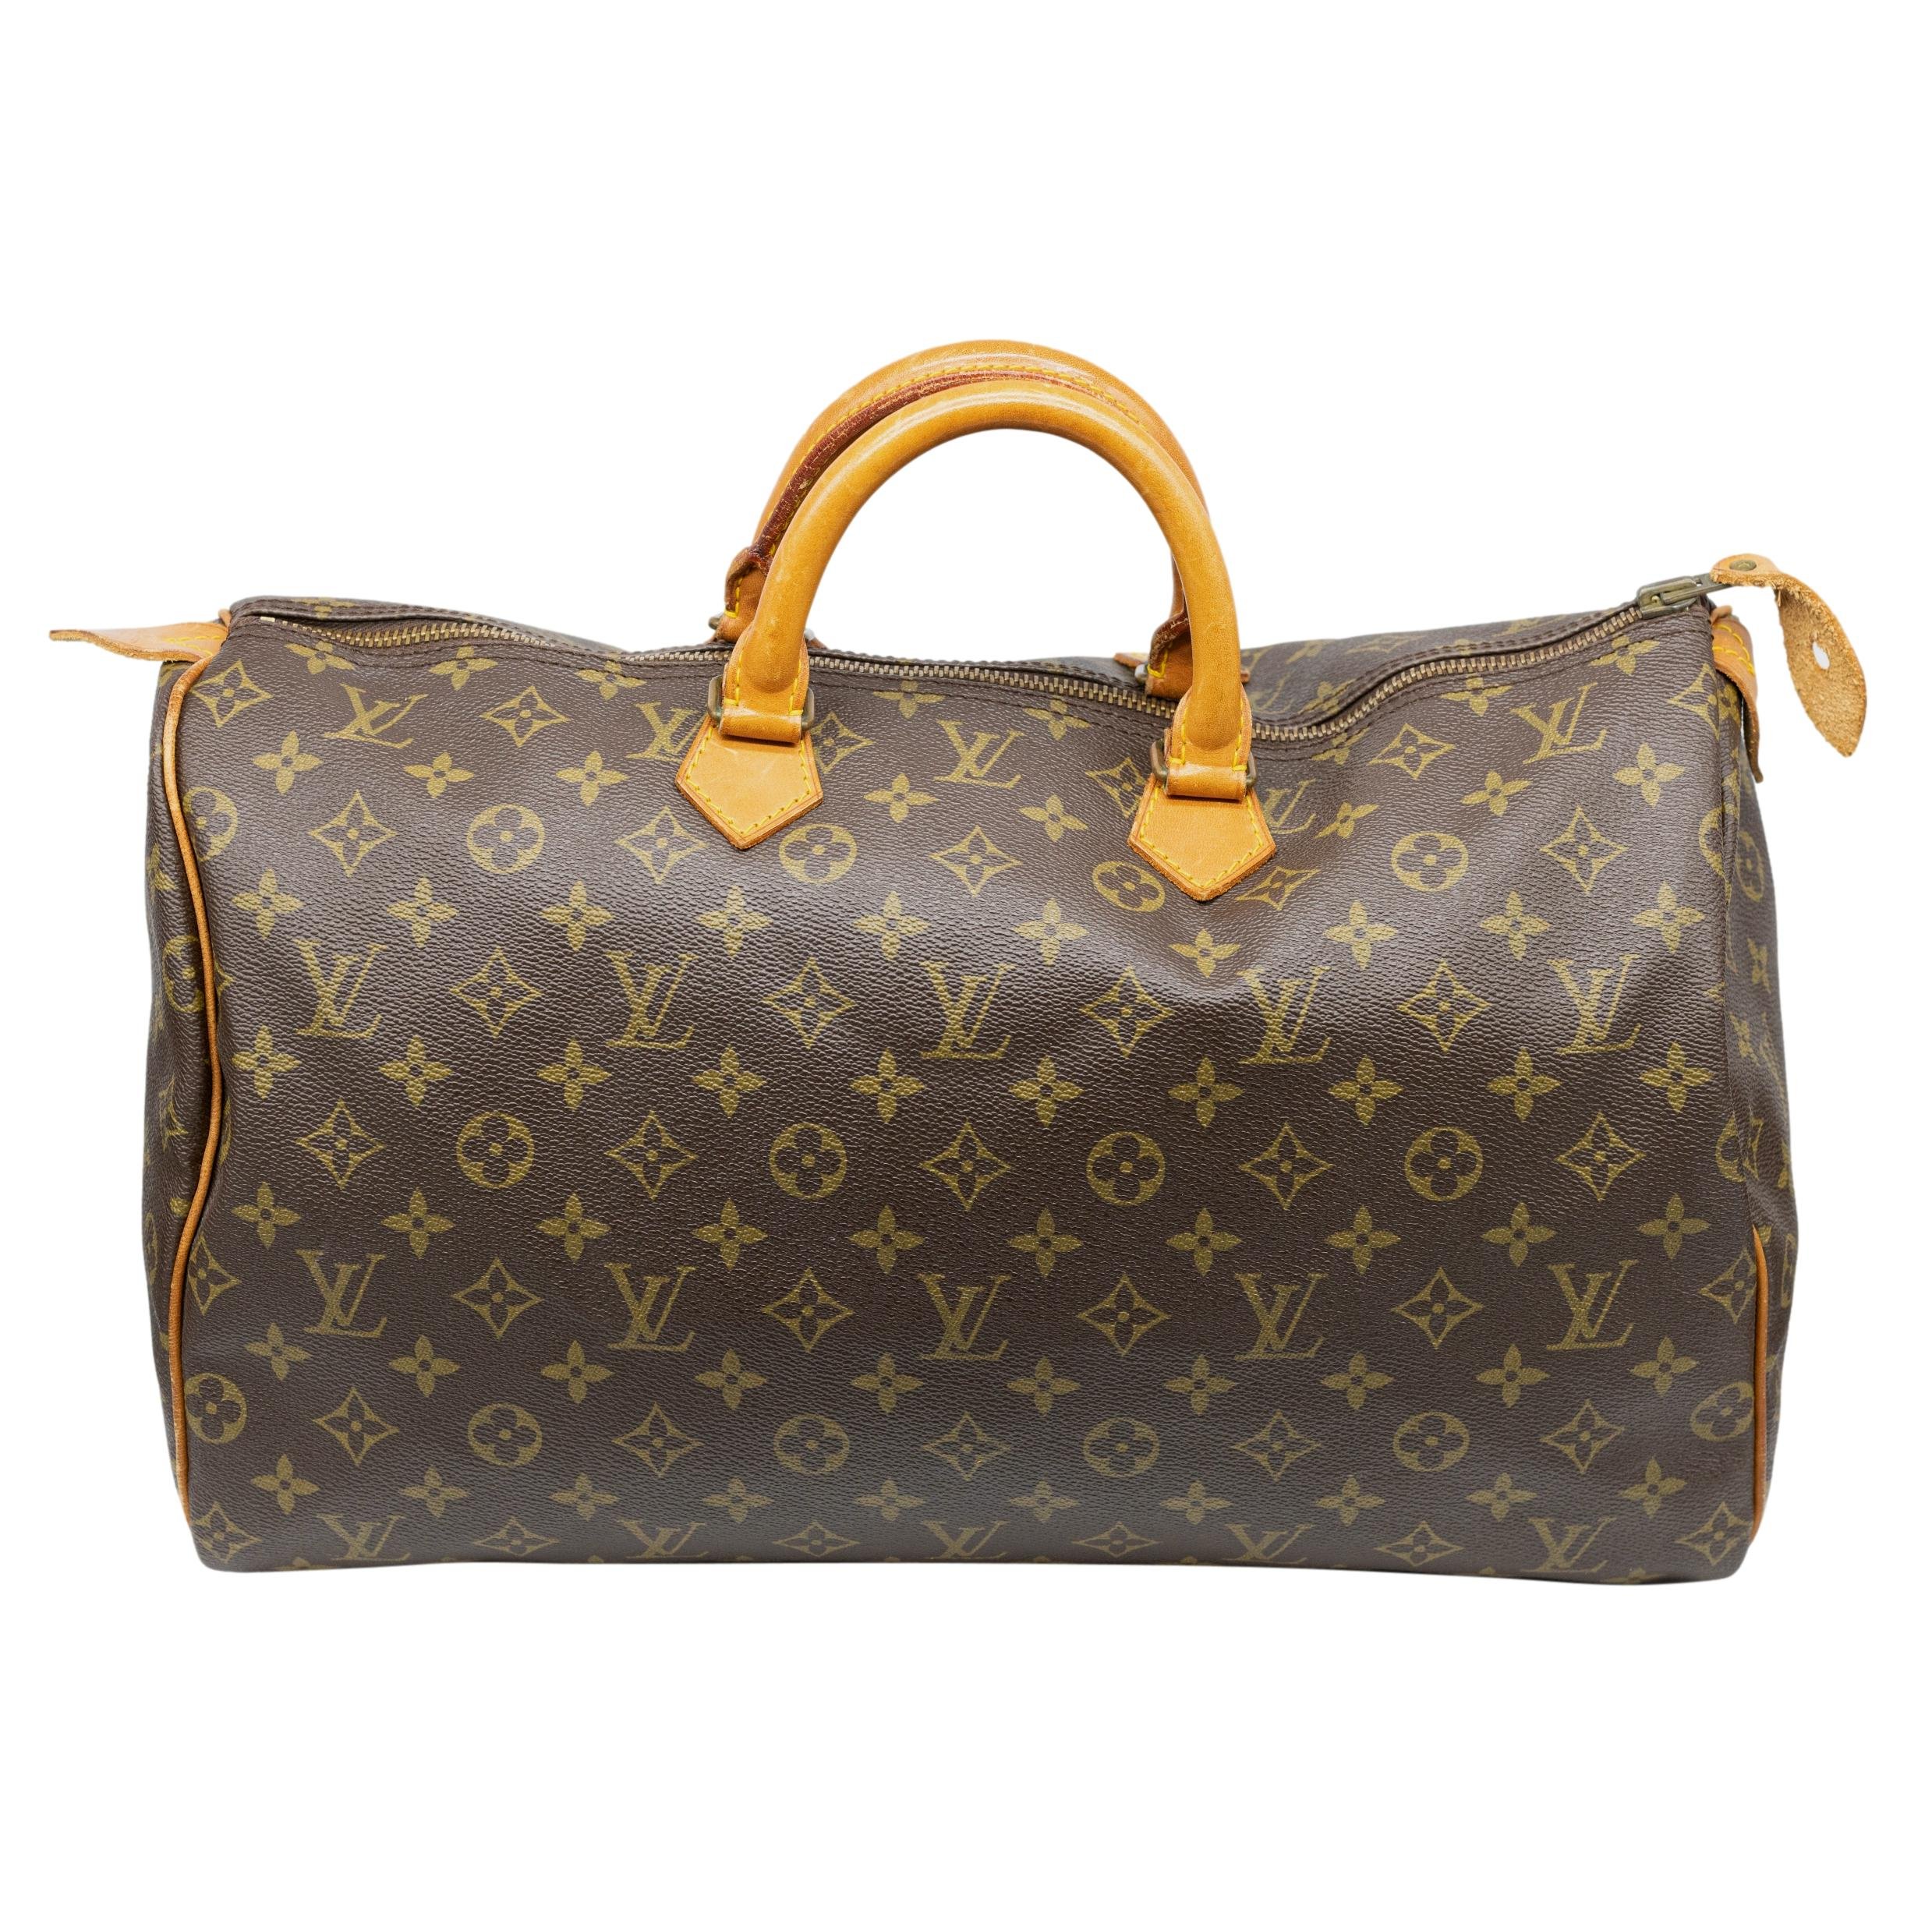 How To Spot Fake Louis Vuitton Monogram Bags  The Handbag Clinic